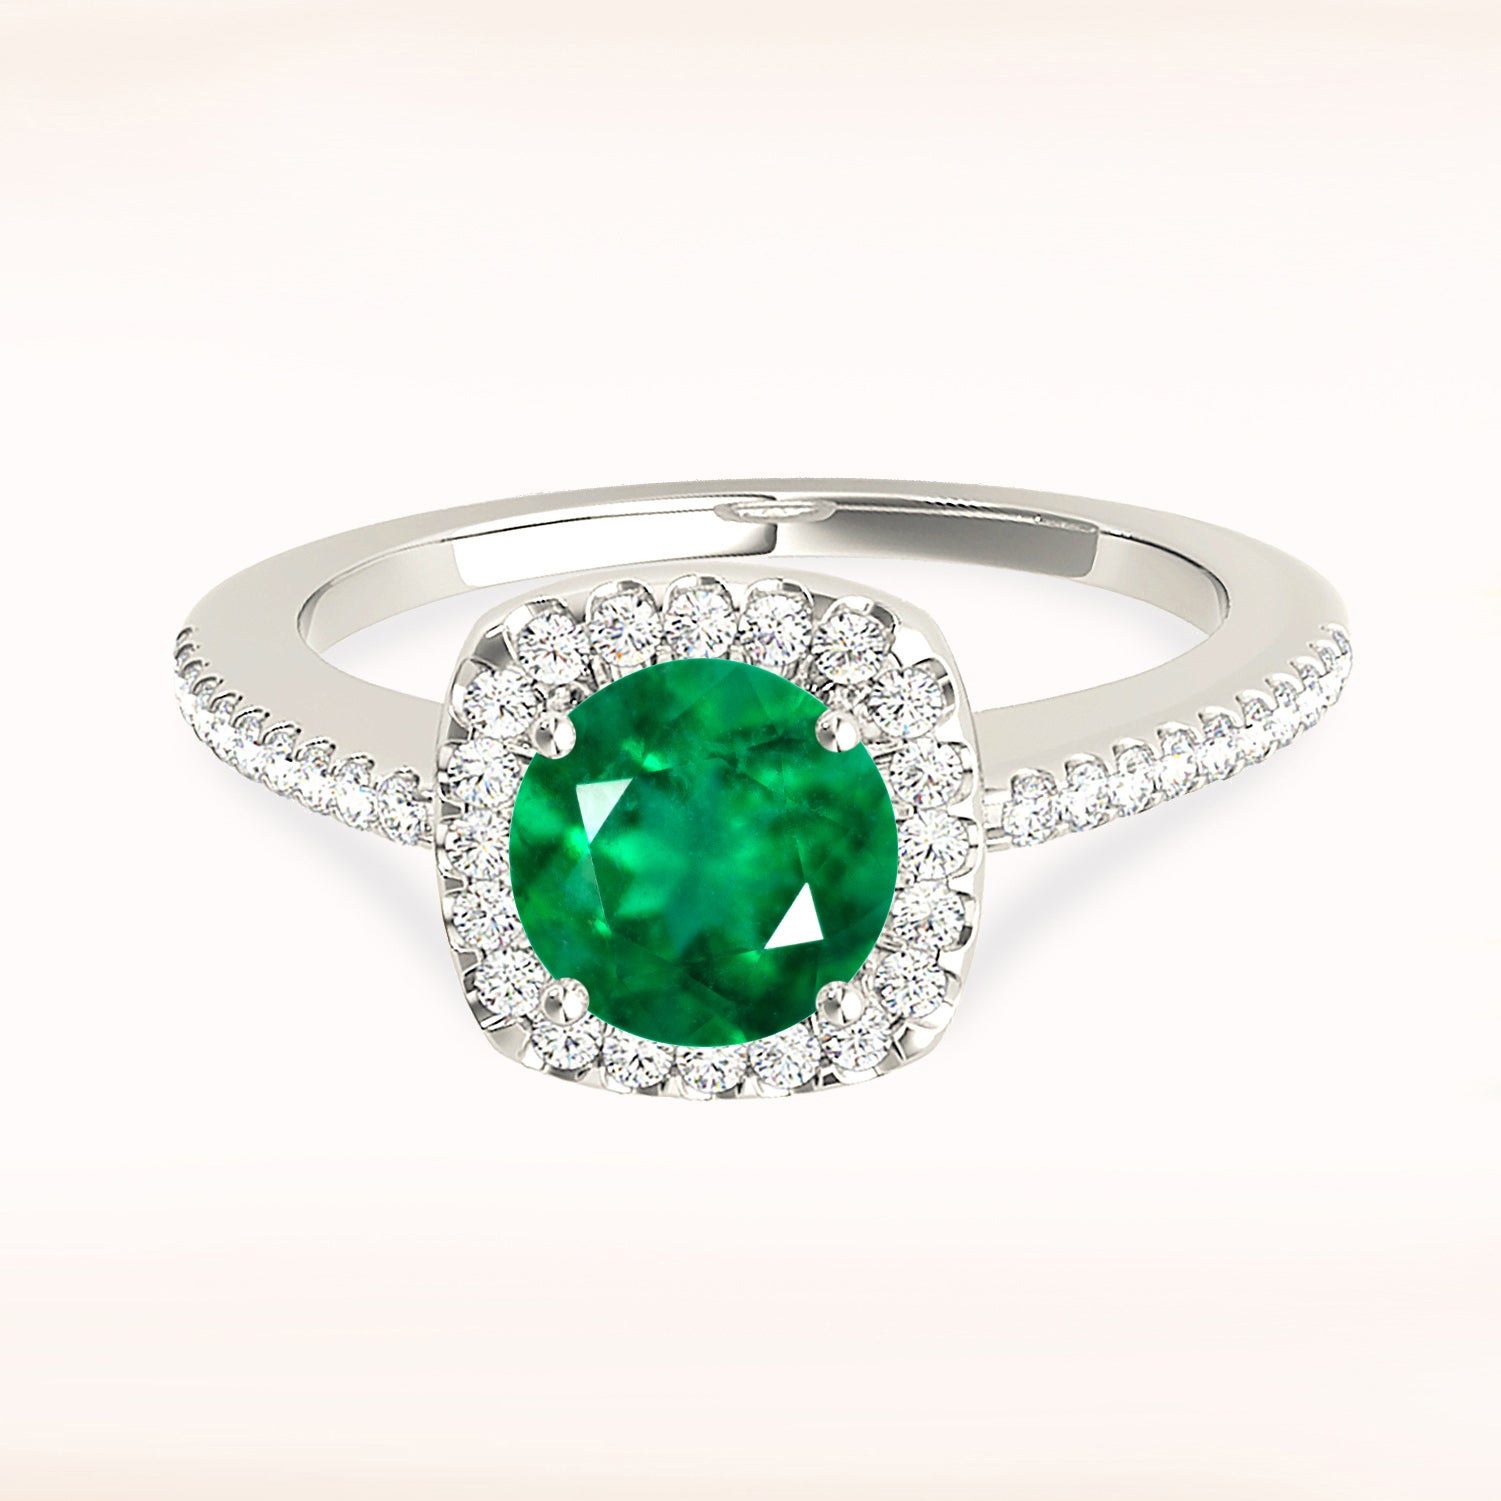 1.68 ct. Genuine Emerald Ring With 0.25 ctw. Diamond Halo And Thin Diamond Shank-in 14K/18K White, Yellow, Rose Gold and Platinum - Christmas Jewelry Gift -VIRABYANI